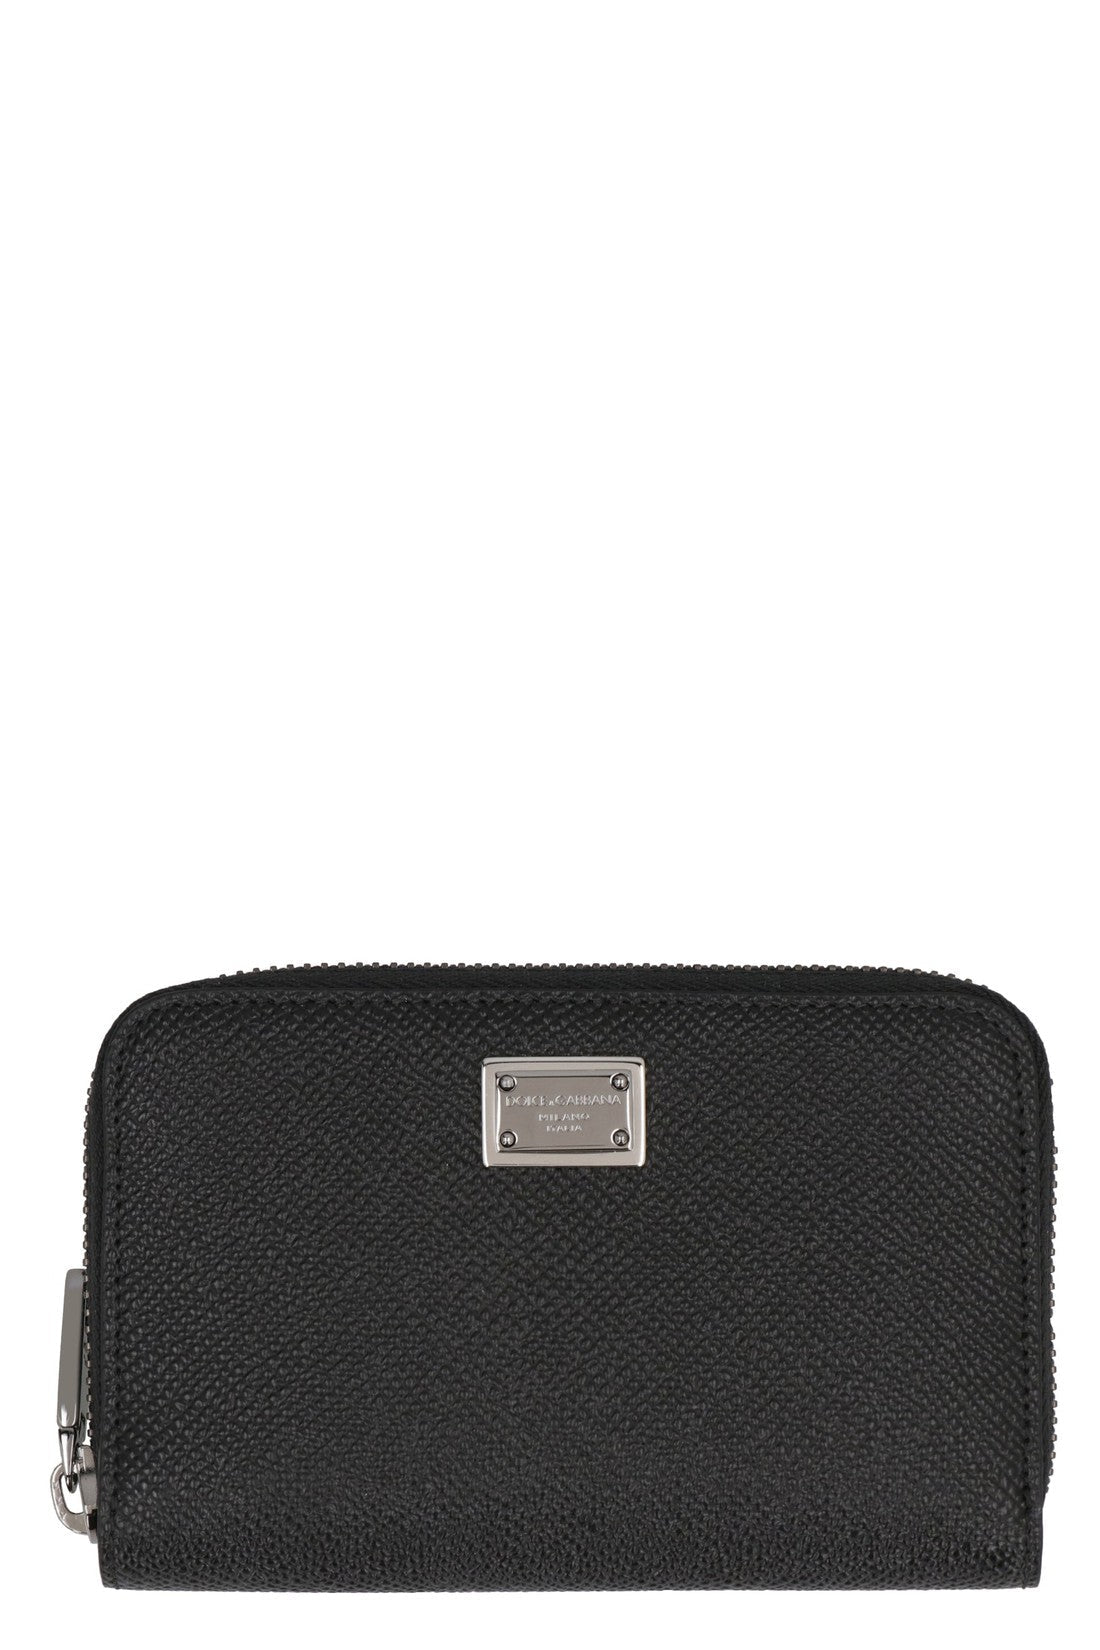 Dolce & Gabbana-OUTLET-SALE-Leather wallet-ARCHIVIST